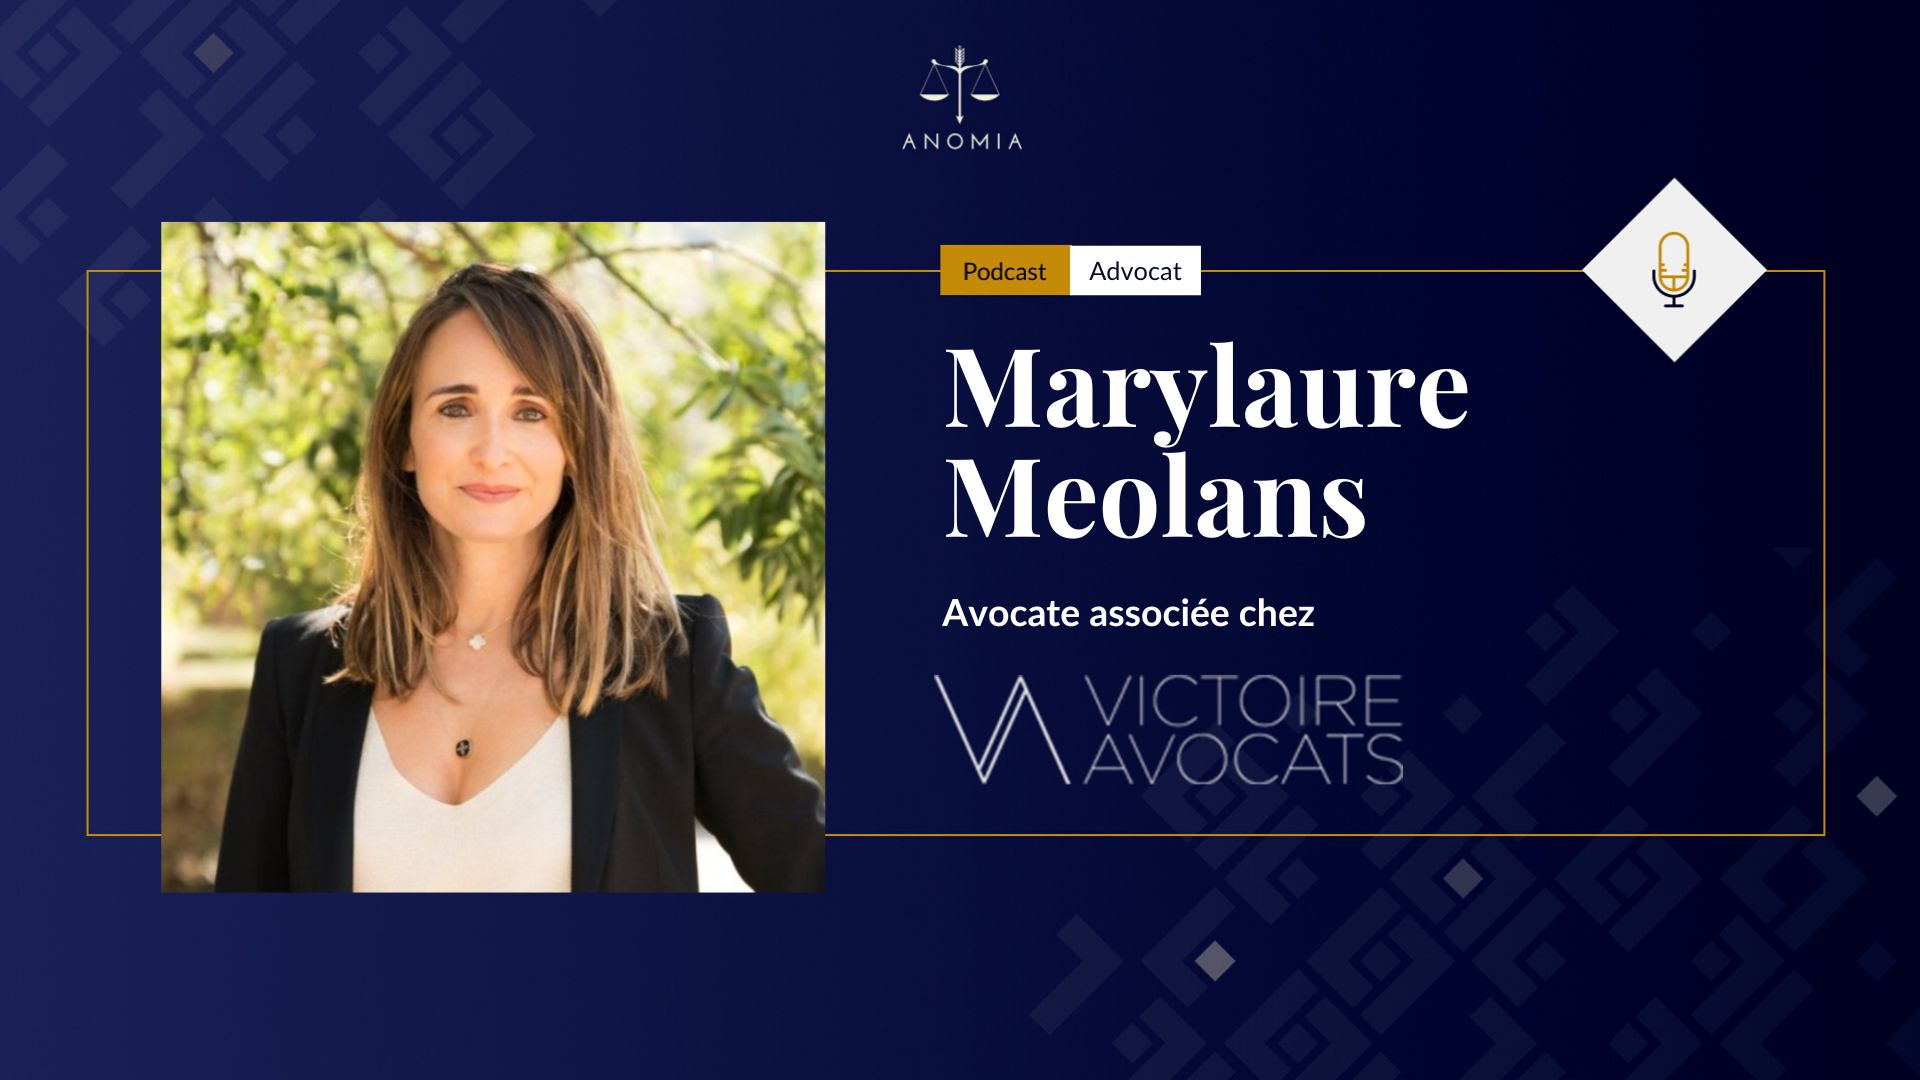 Podcast : Marylaure Meolans fondatrice de victoire avocat | Anomia